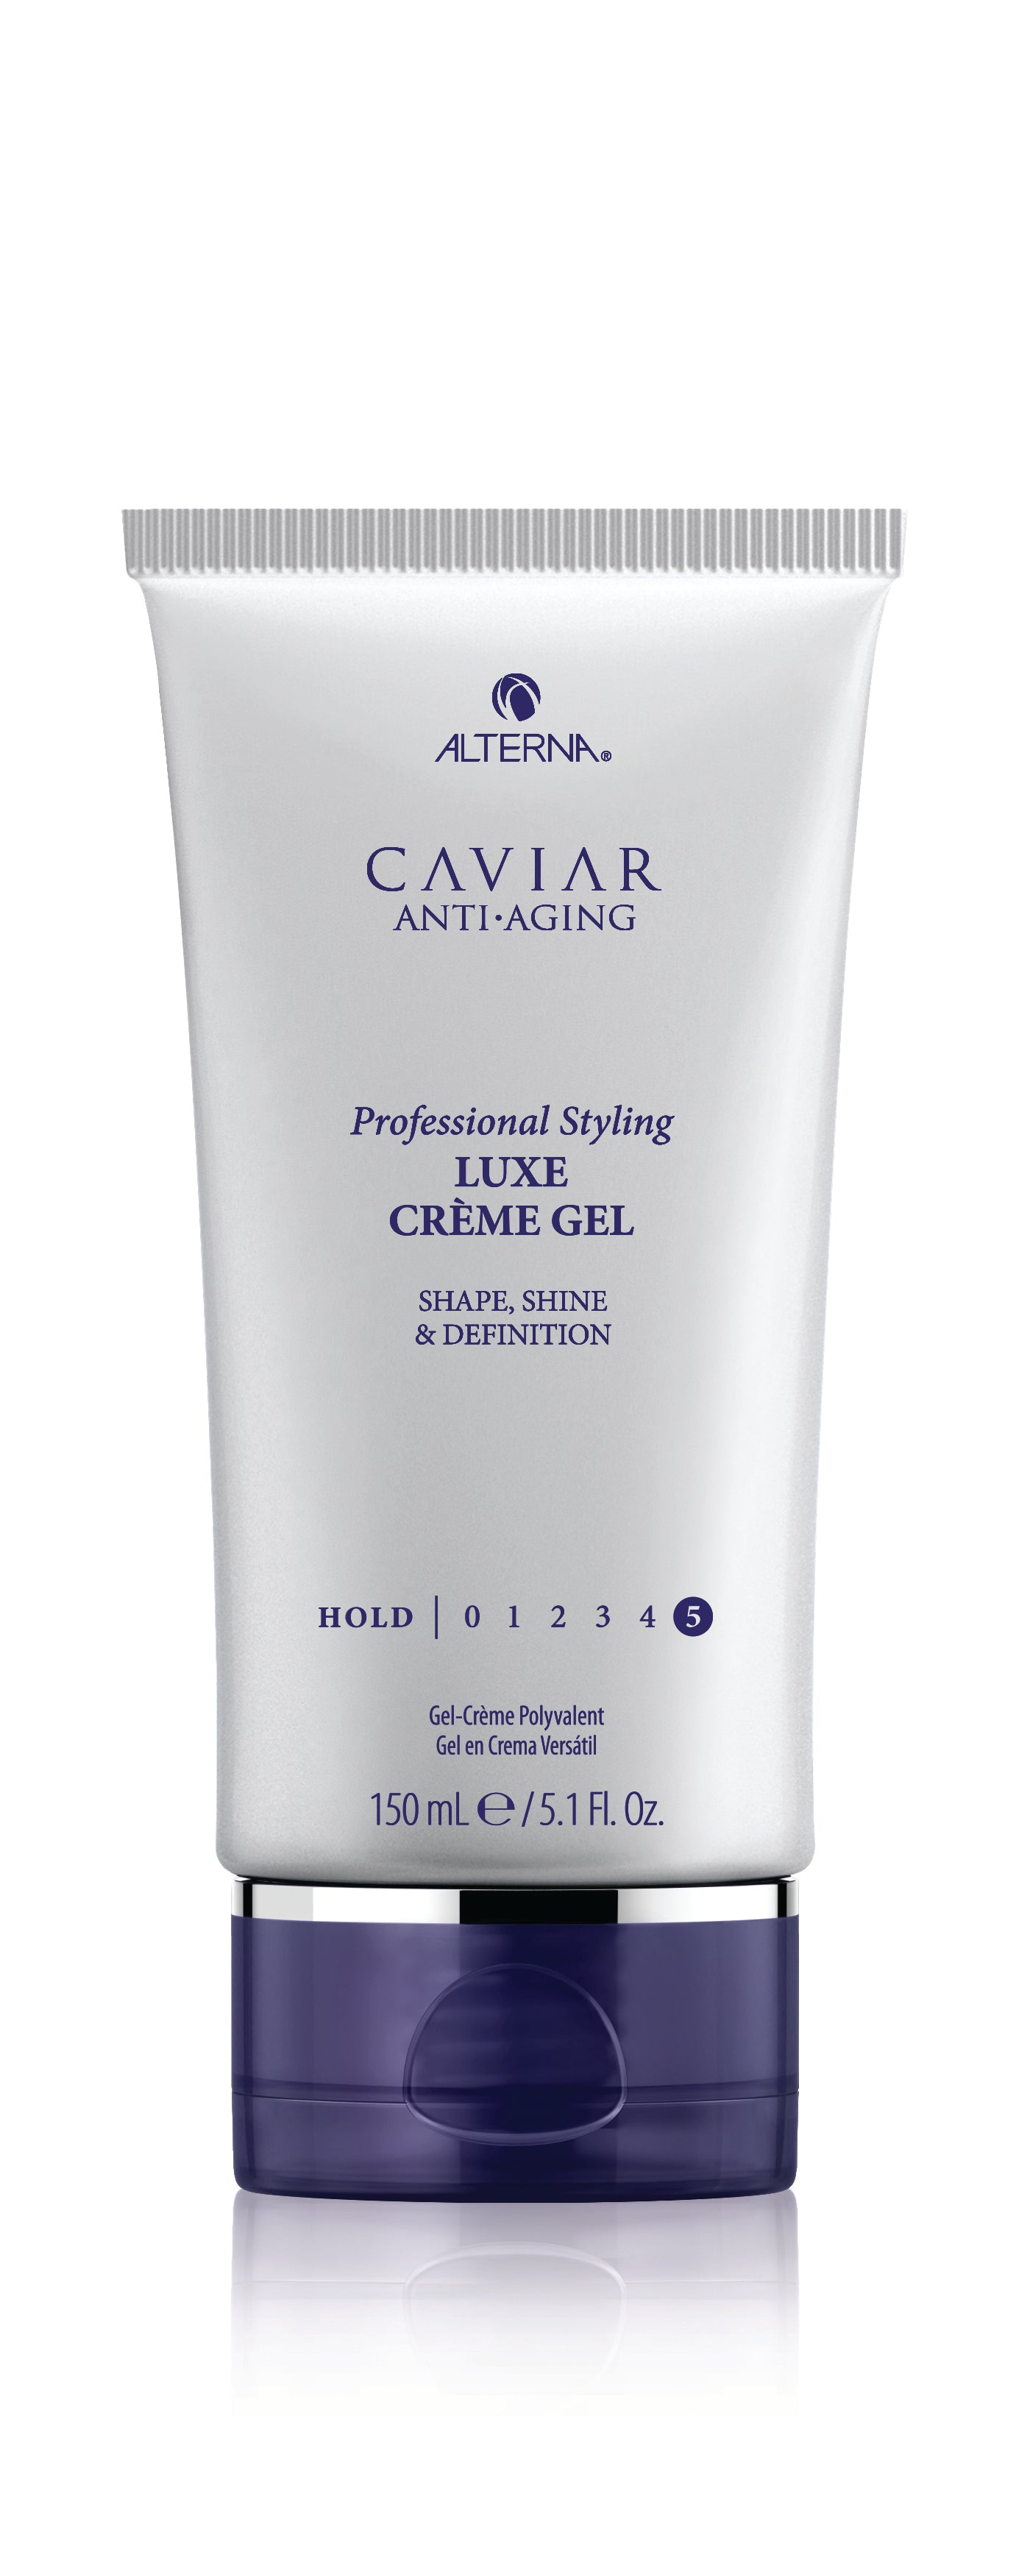 Alterna Caviar Anti-Aging Professional Styling Luxe Creme Gel 150 ml